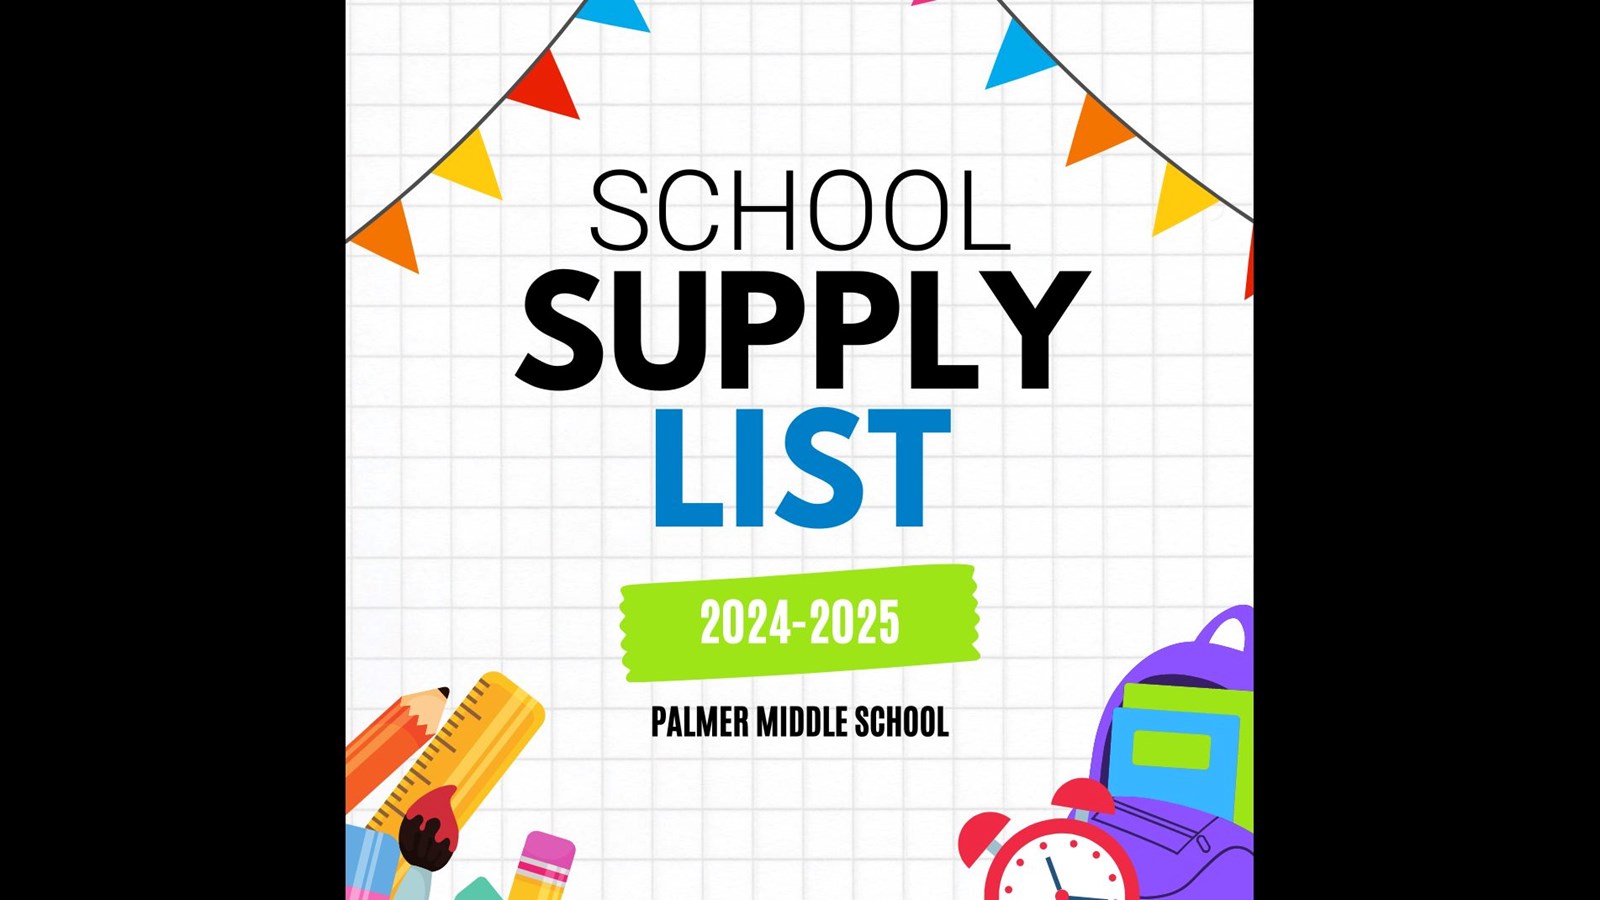 School supply list with school supplies around the words